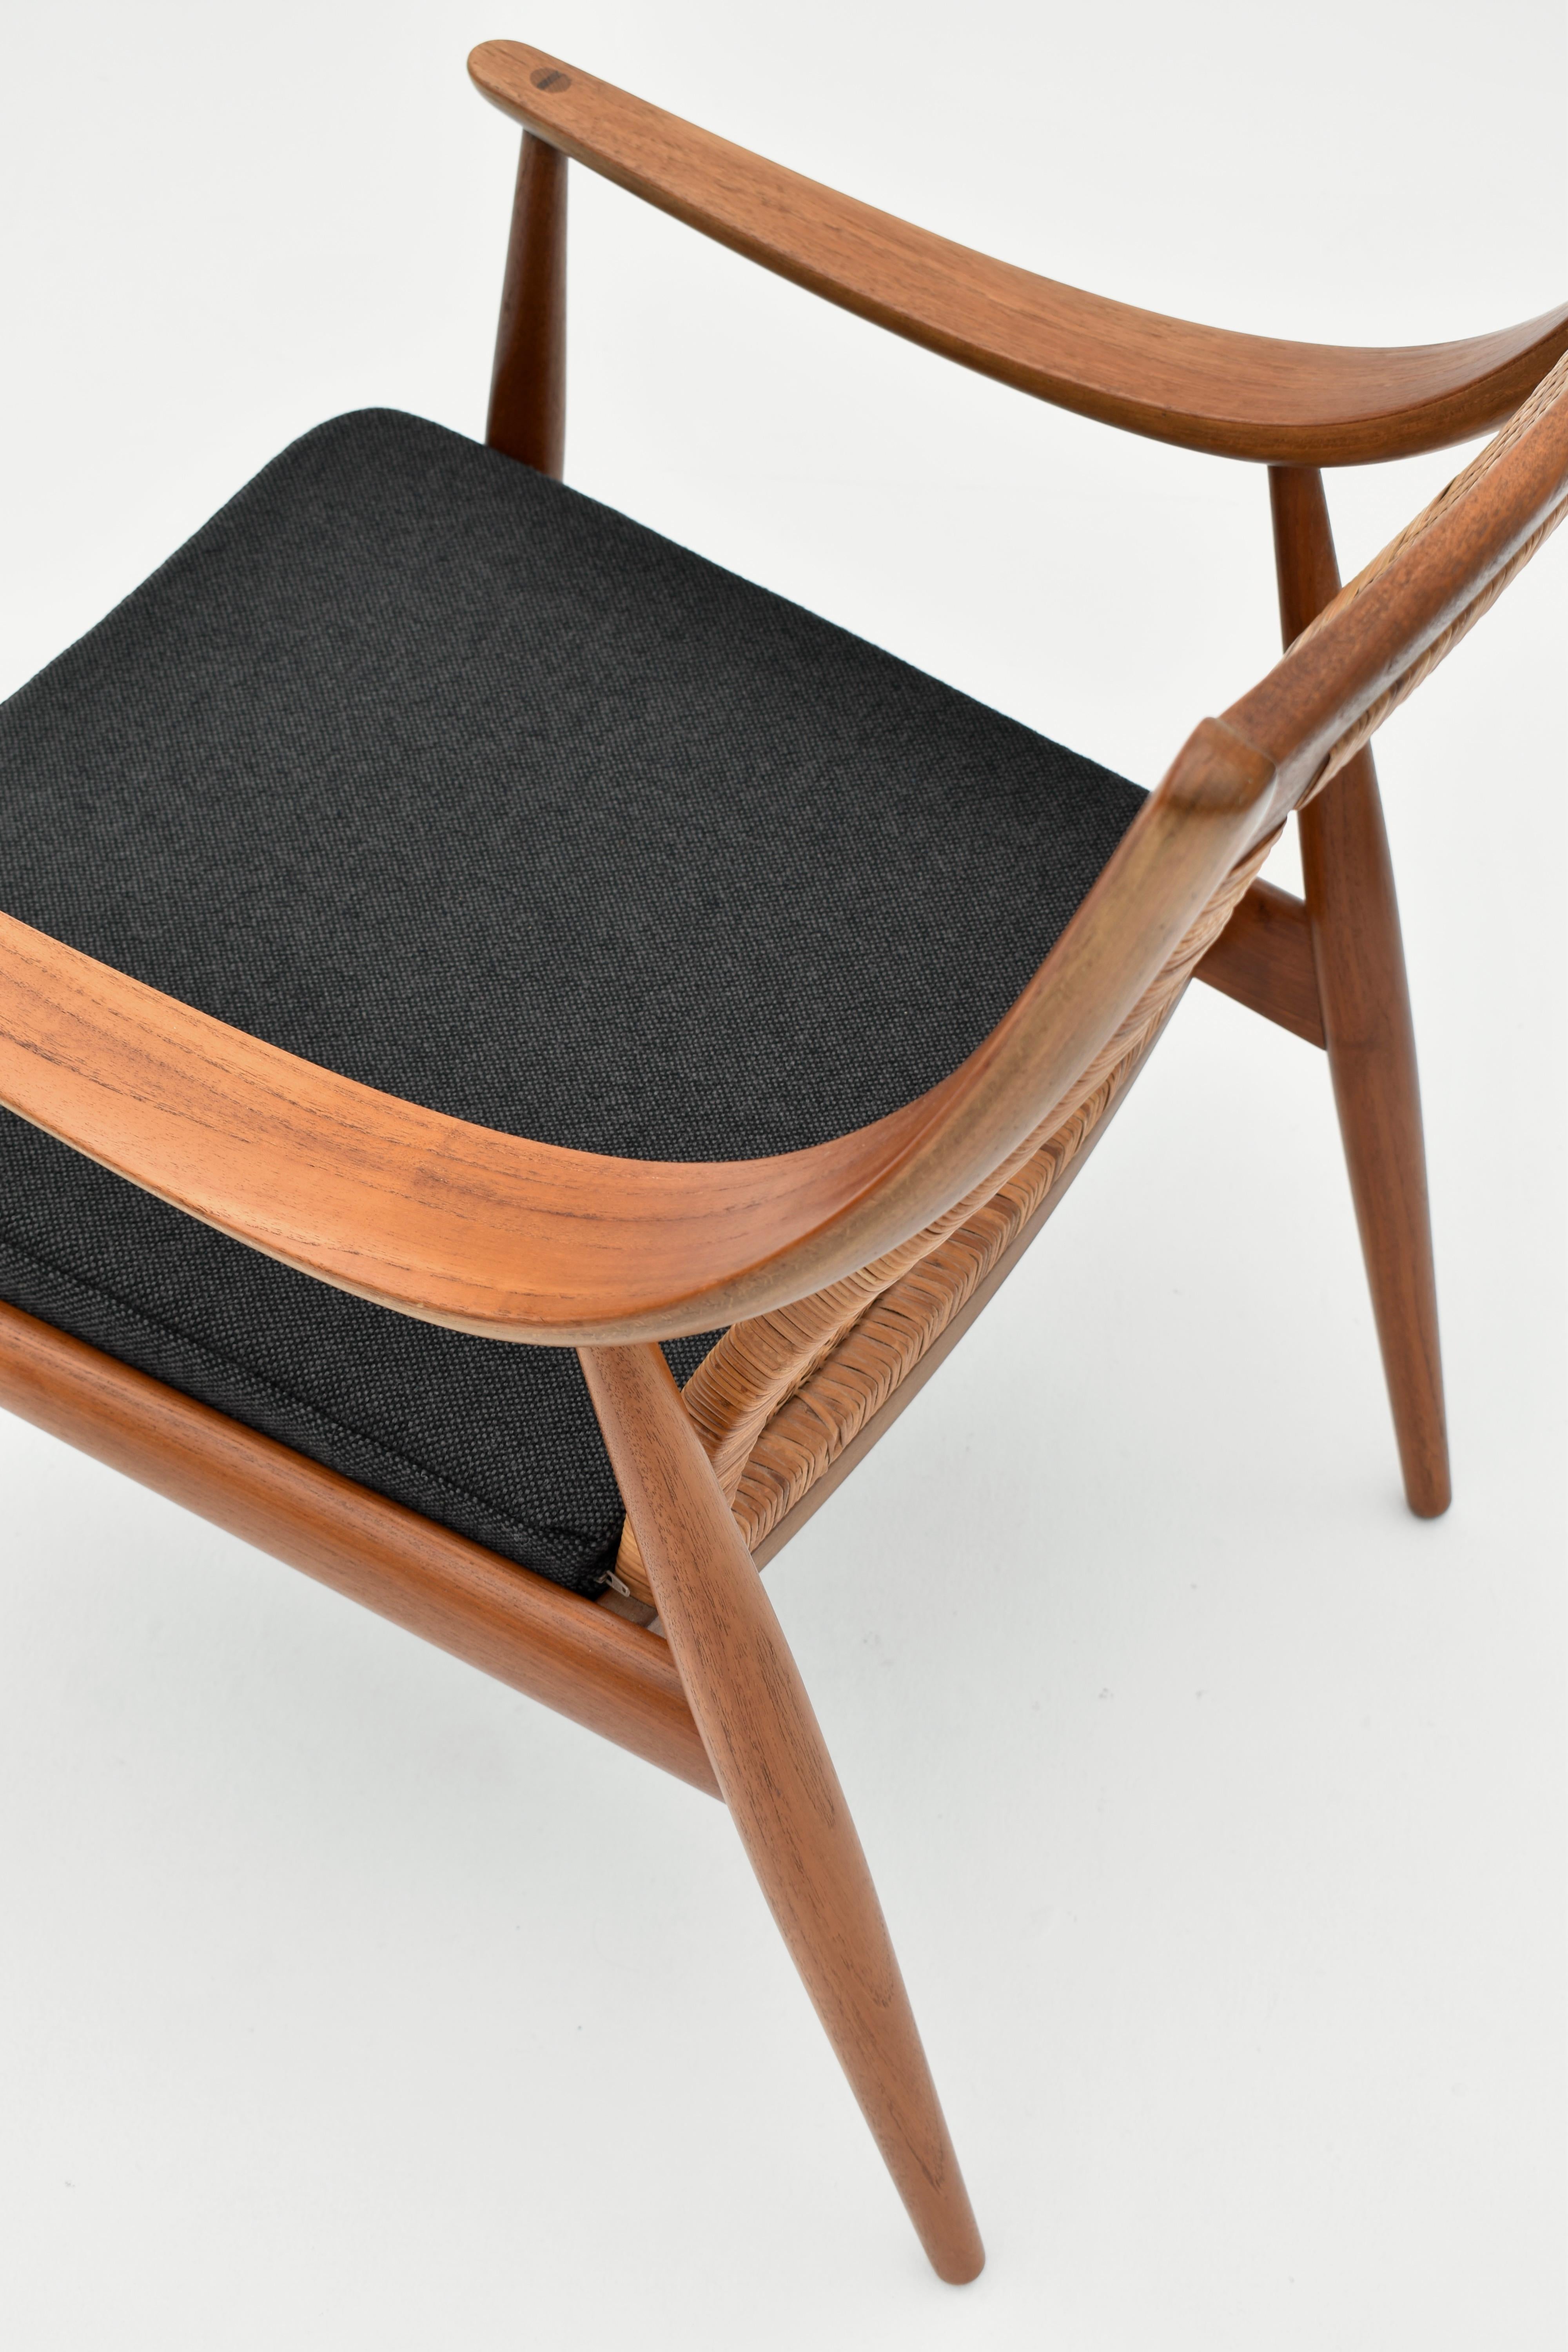 Mid-20th Century Peter Hvidt & Orla Mølgaard Nielsen Model 147 Lounge Chair For France & Son